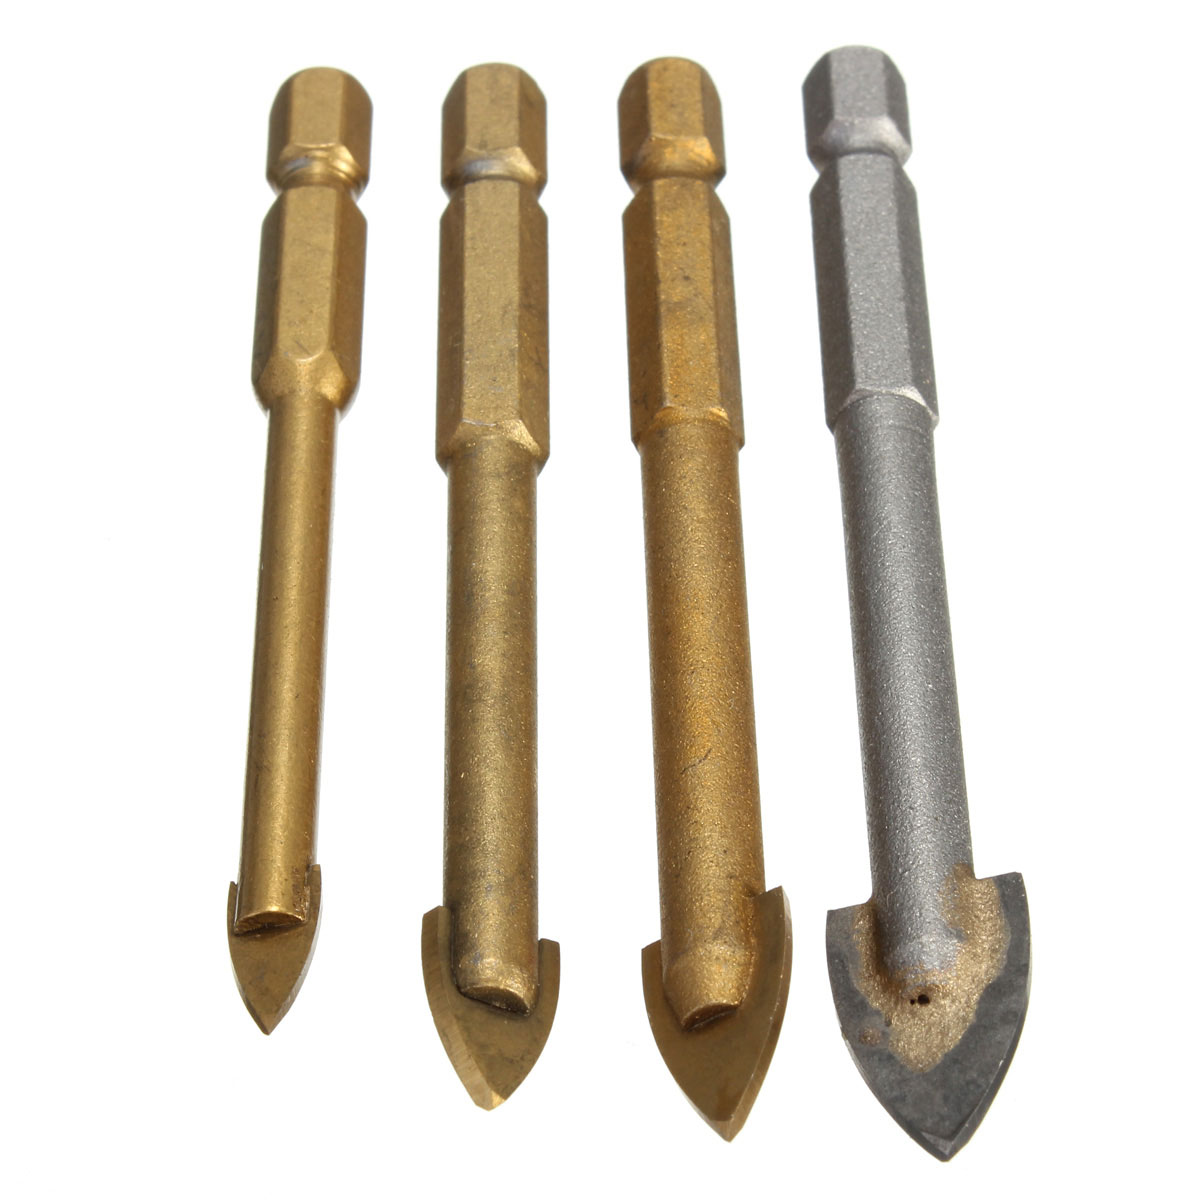 6-12mm-Carbide-Tile-Spear-Head-Drill-Bit-Glass-Drill-Hole-Tool-Tungsten-Carbide-Tipped-Bit-978952-4